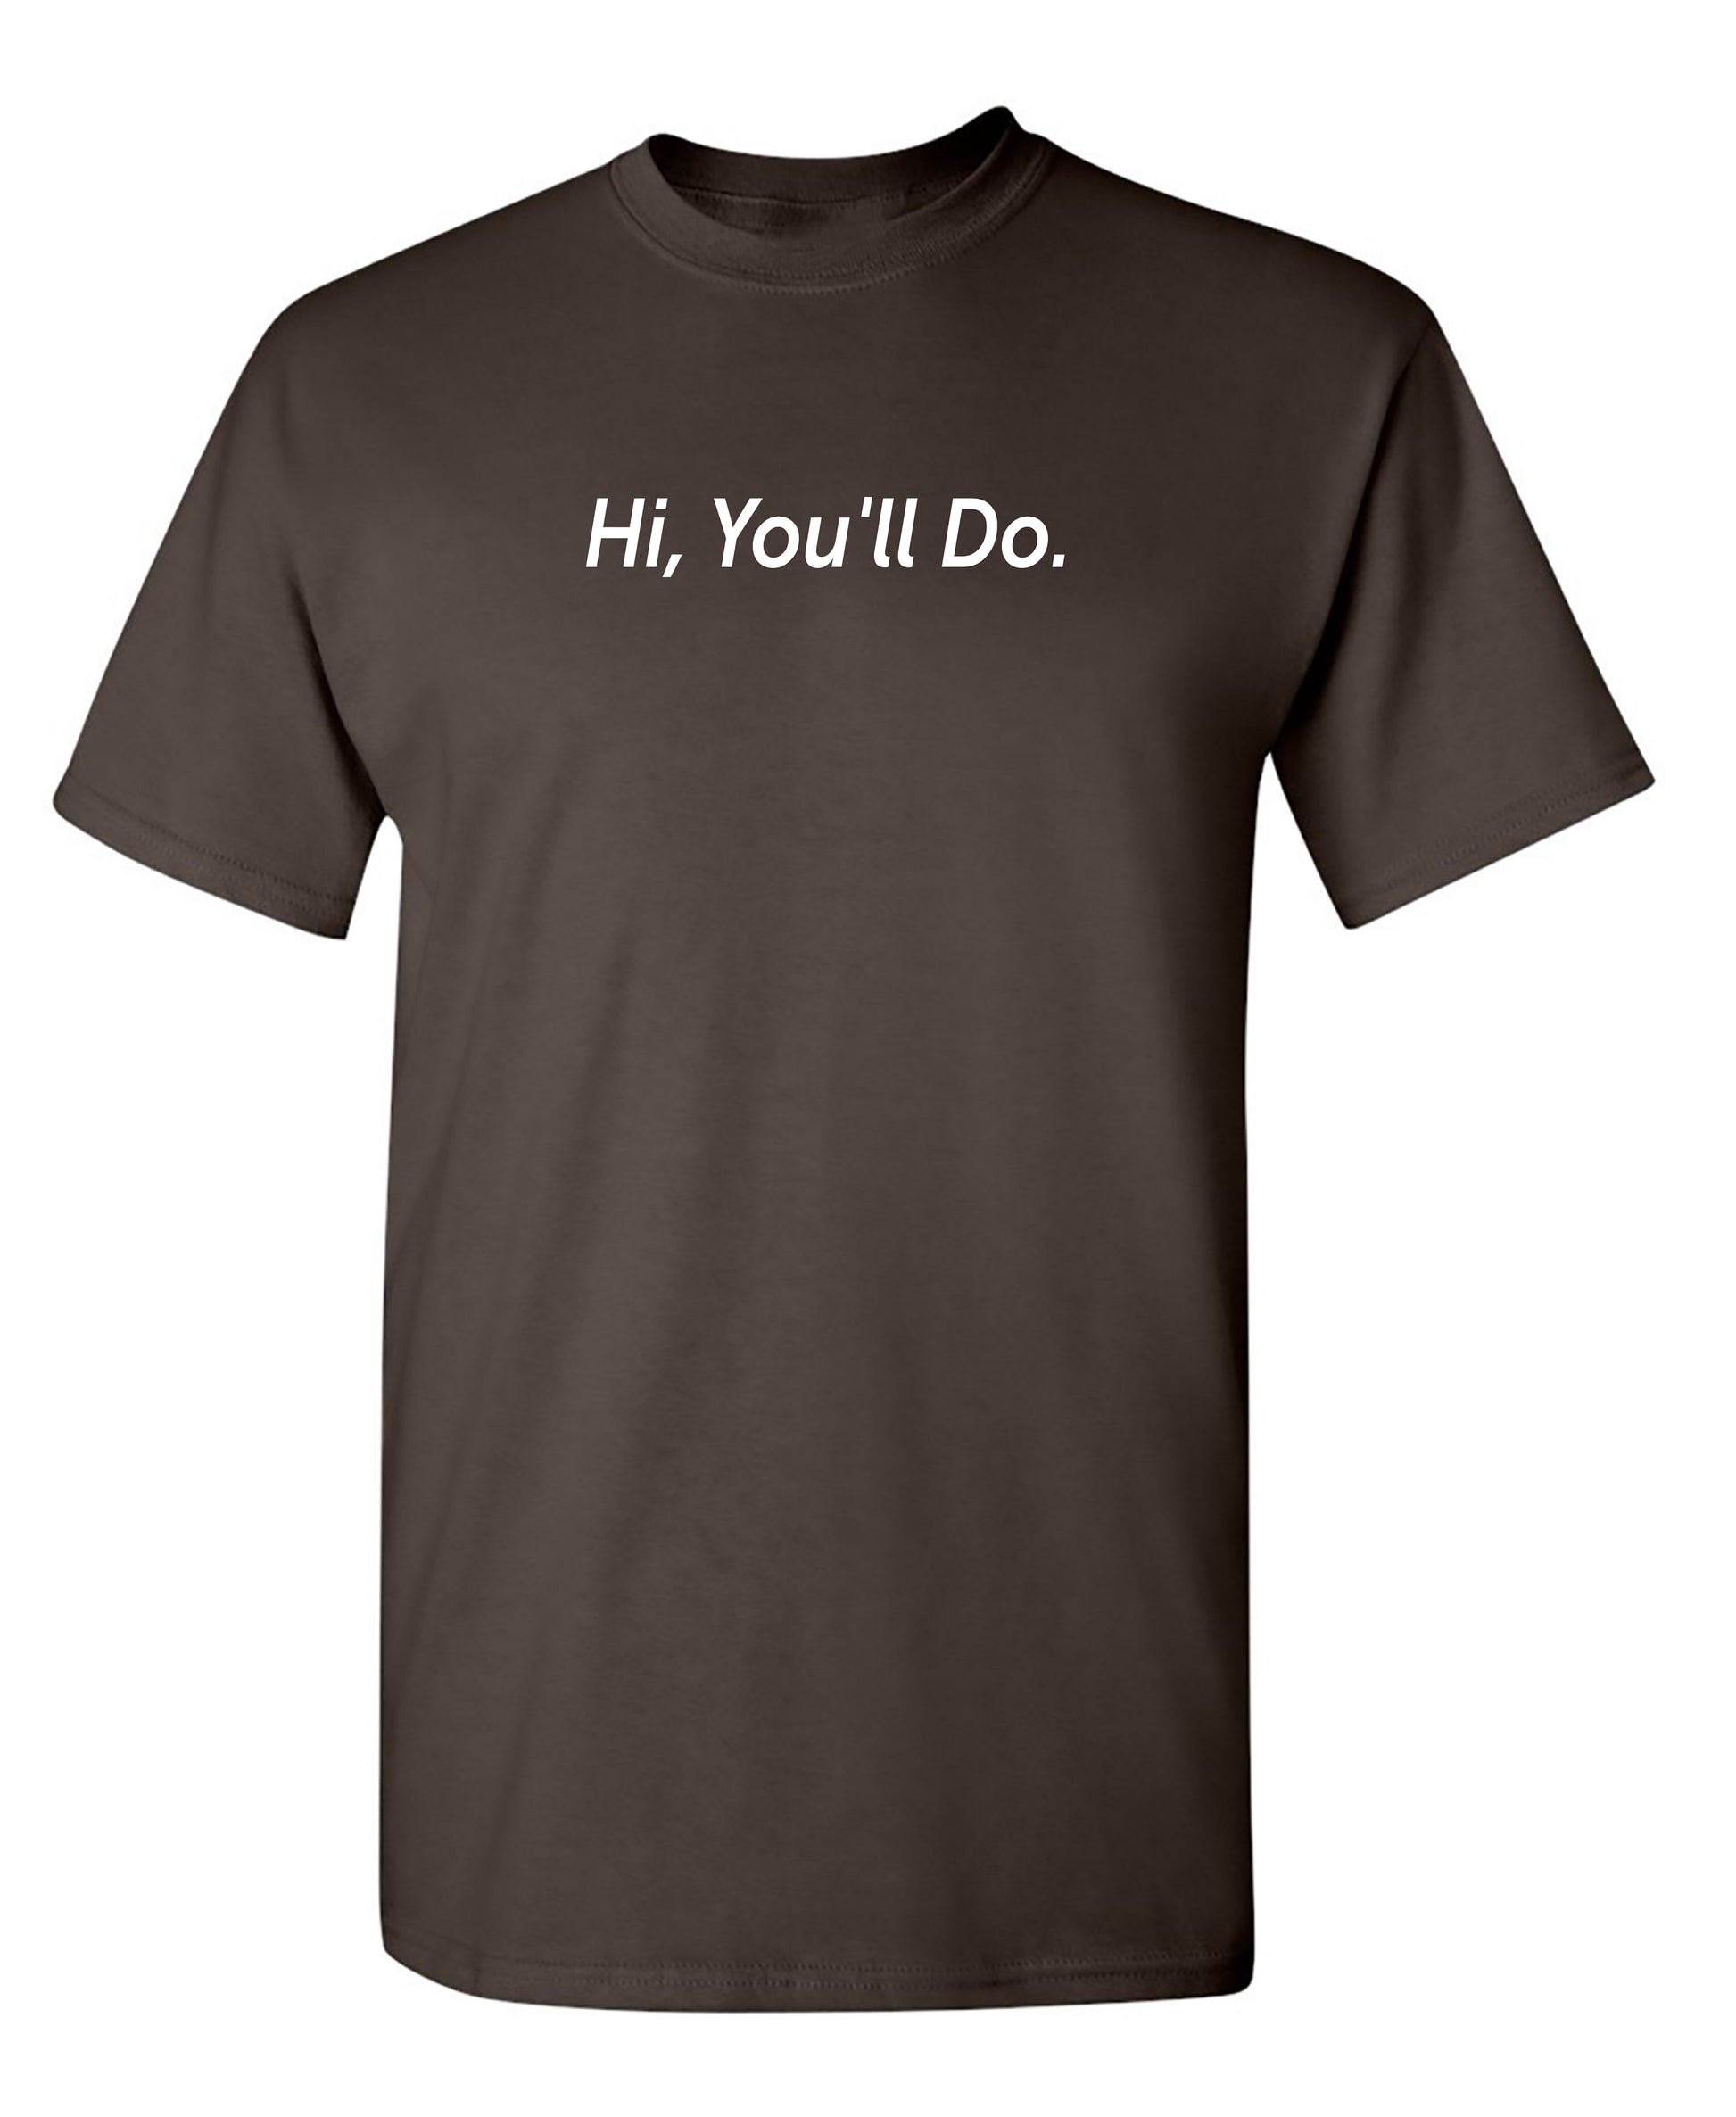 Hi, You'll Do. - Funny T Shirts & Graphic Tees